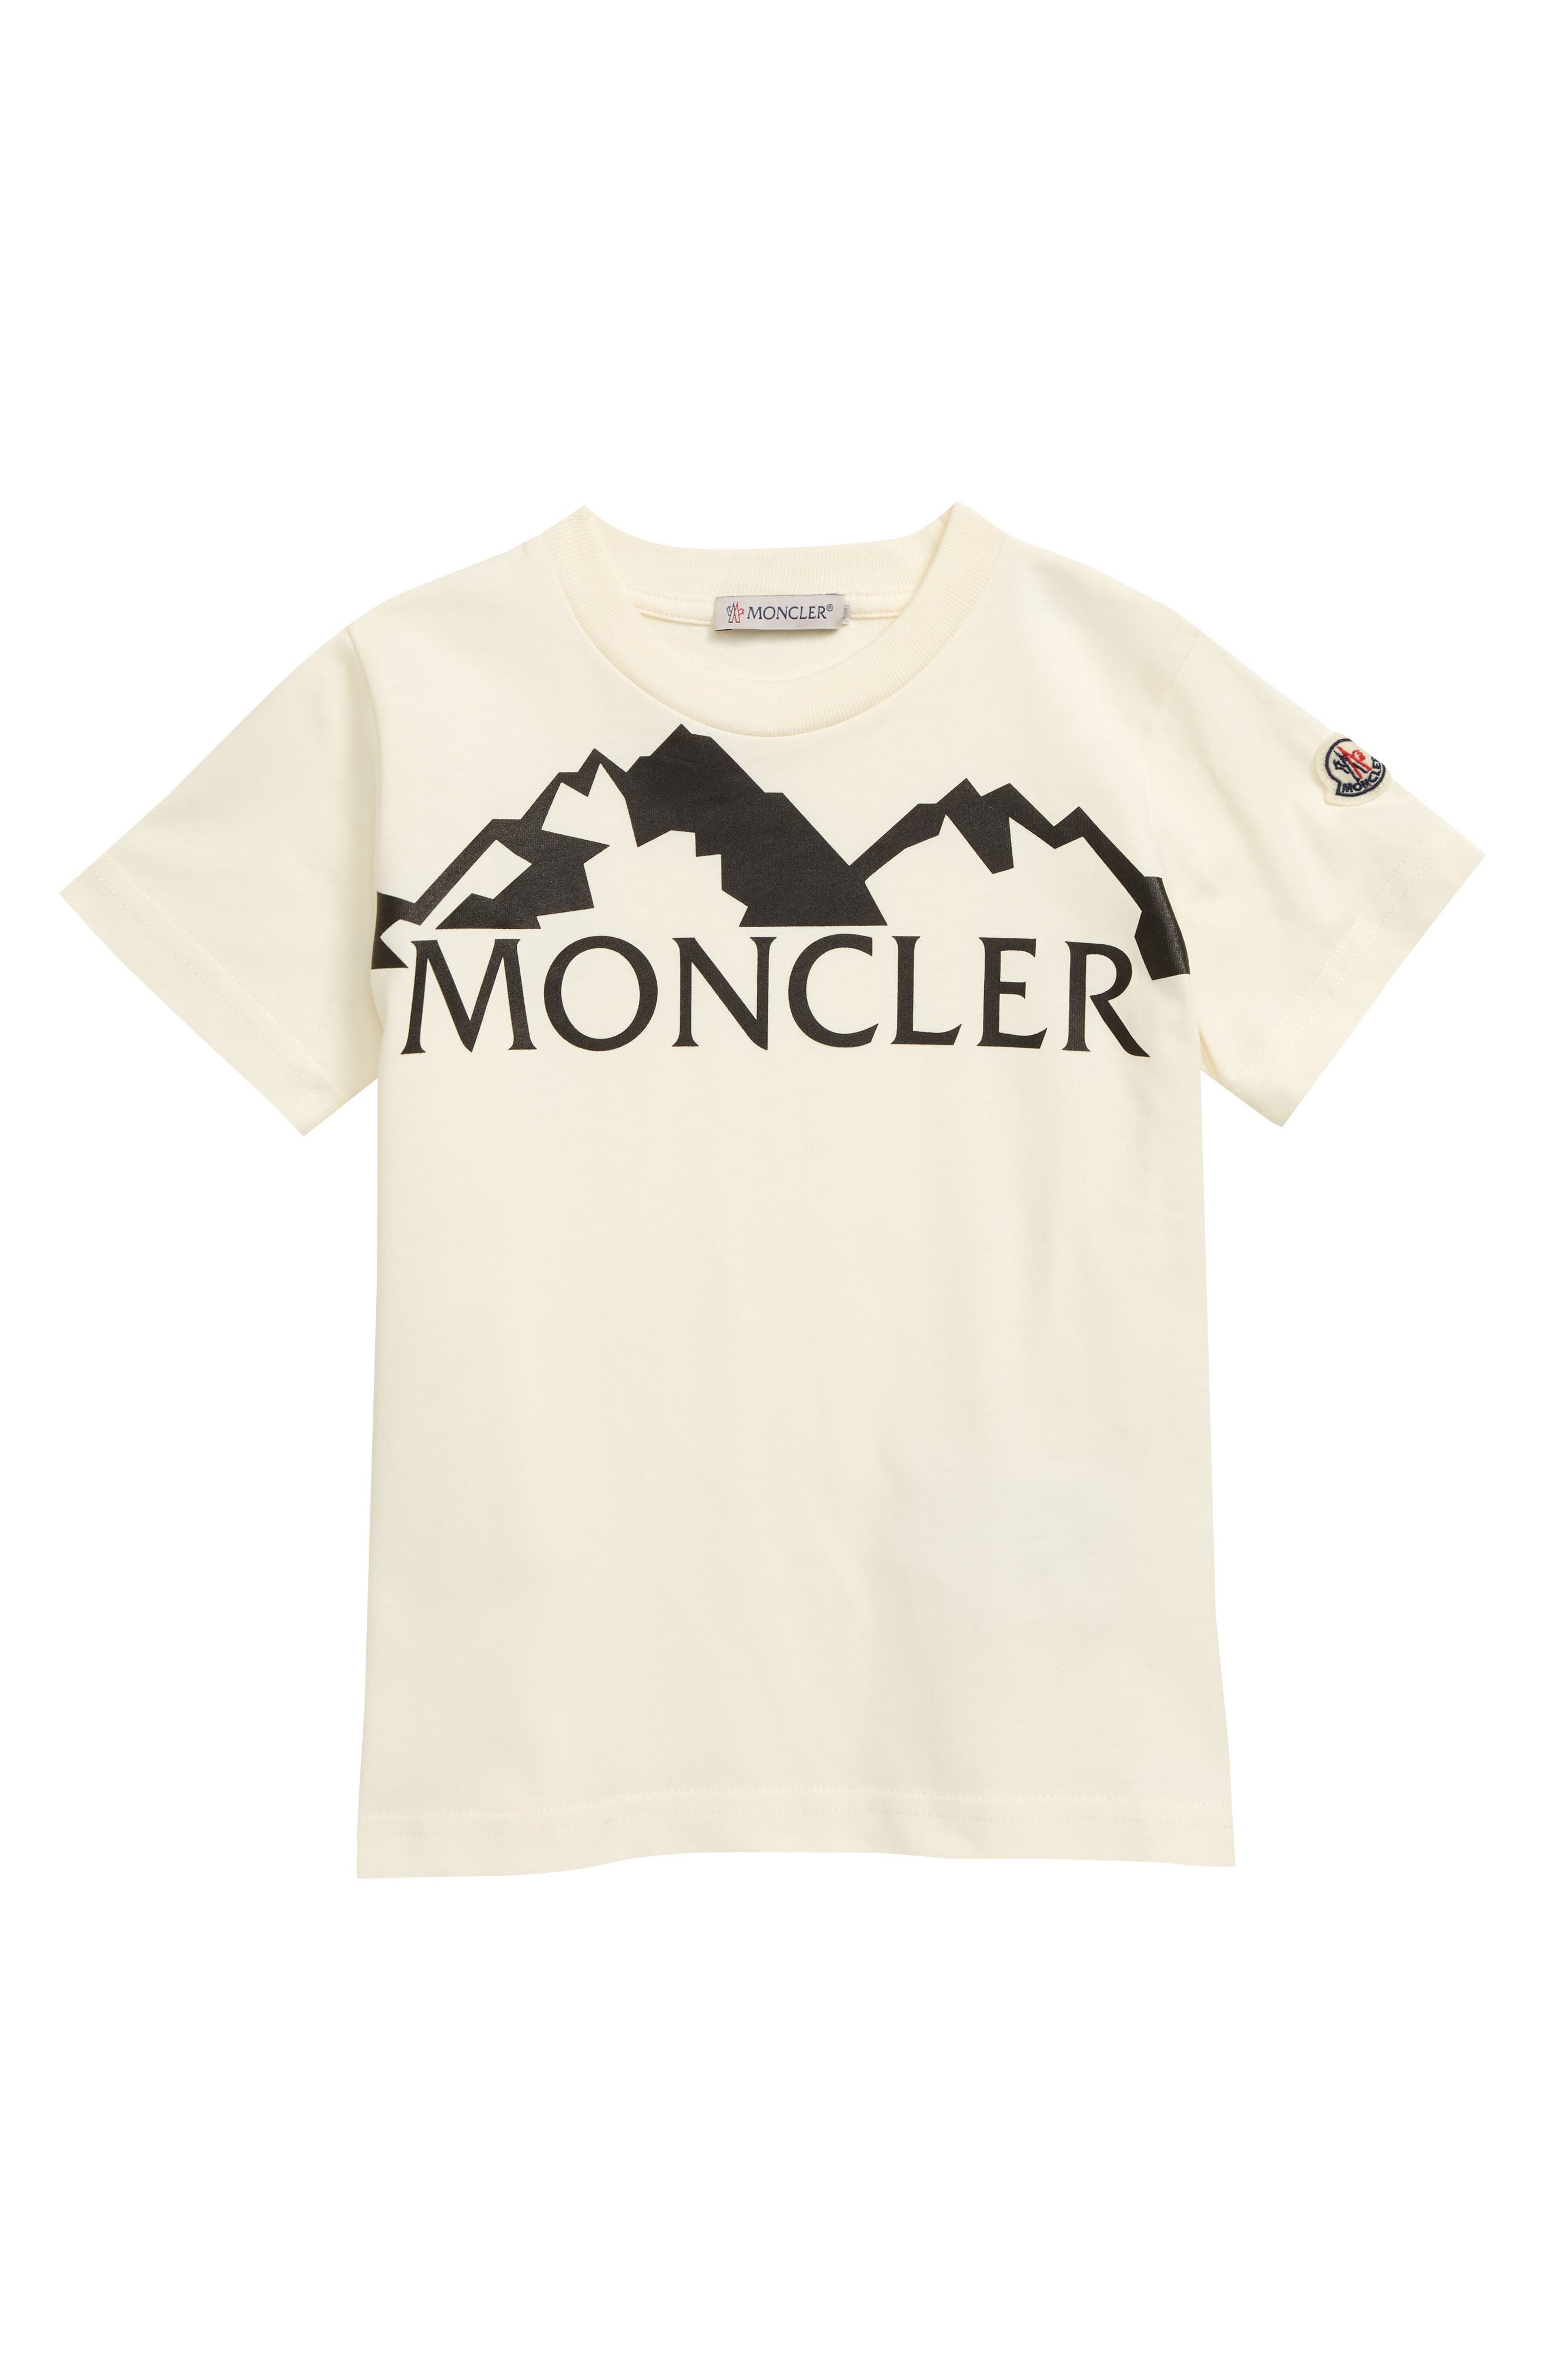 Kids Moncler T Shirt Flash Sales, 51% OFF | www.alforja.cat